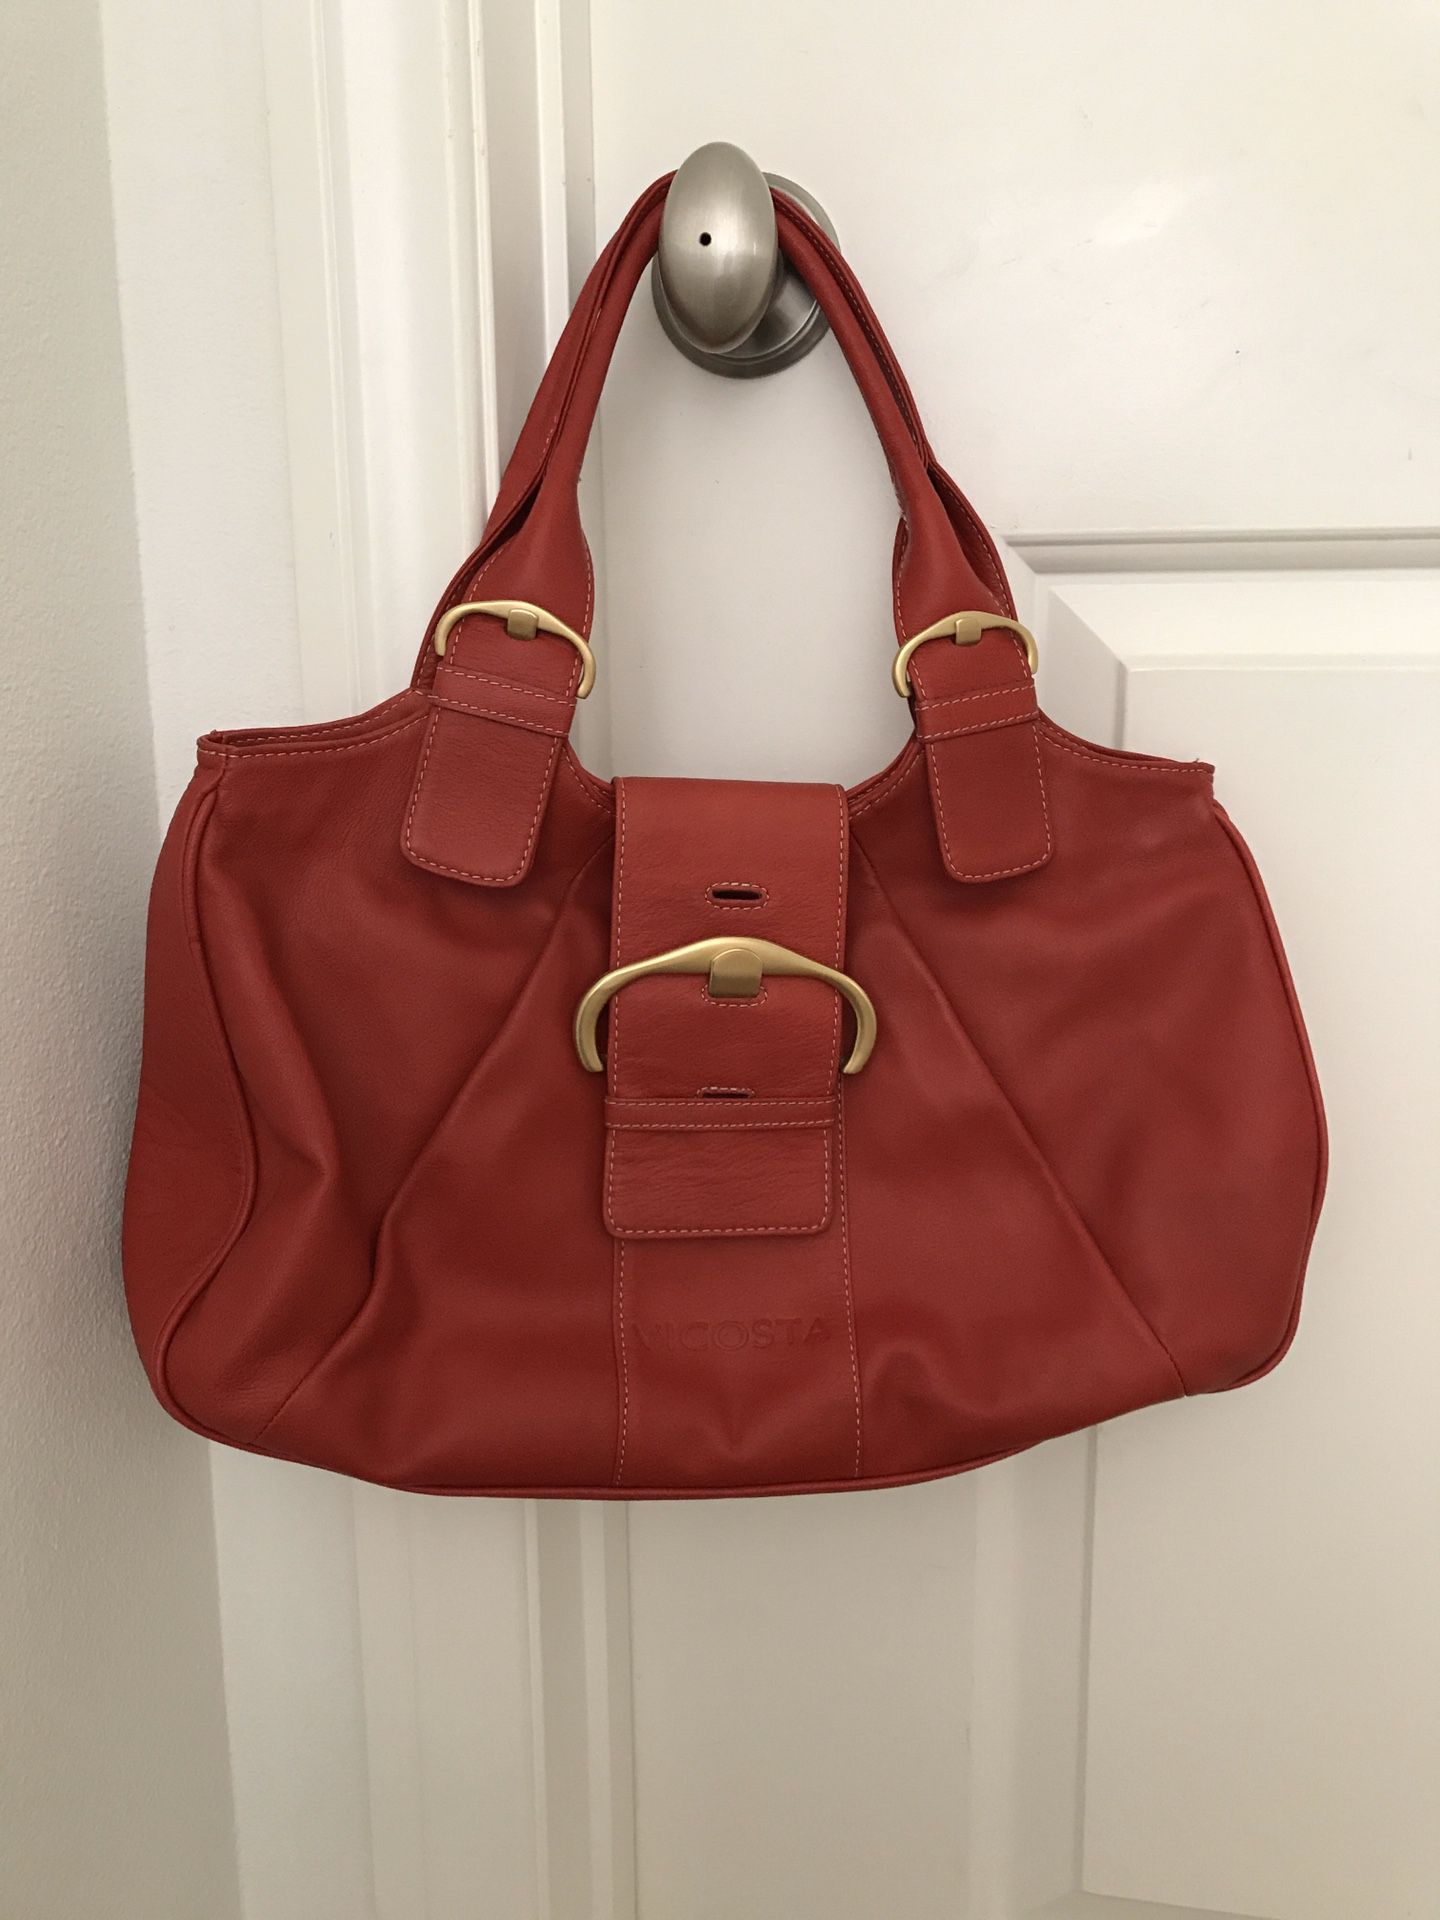 Vicosta leather handbag **like new!